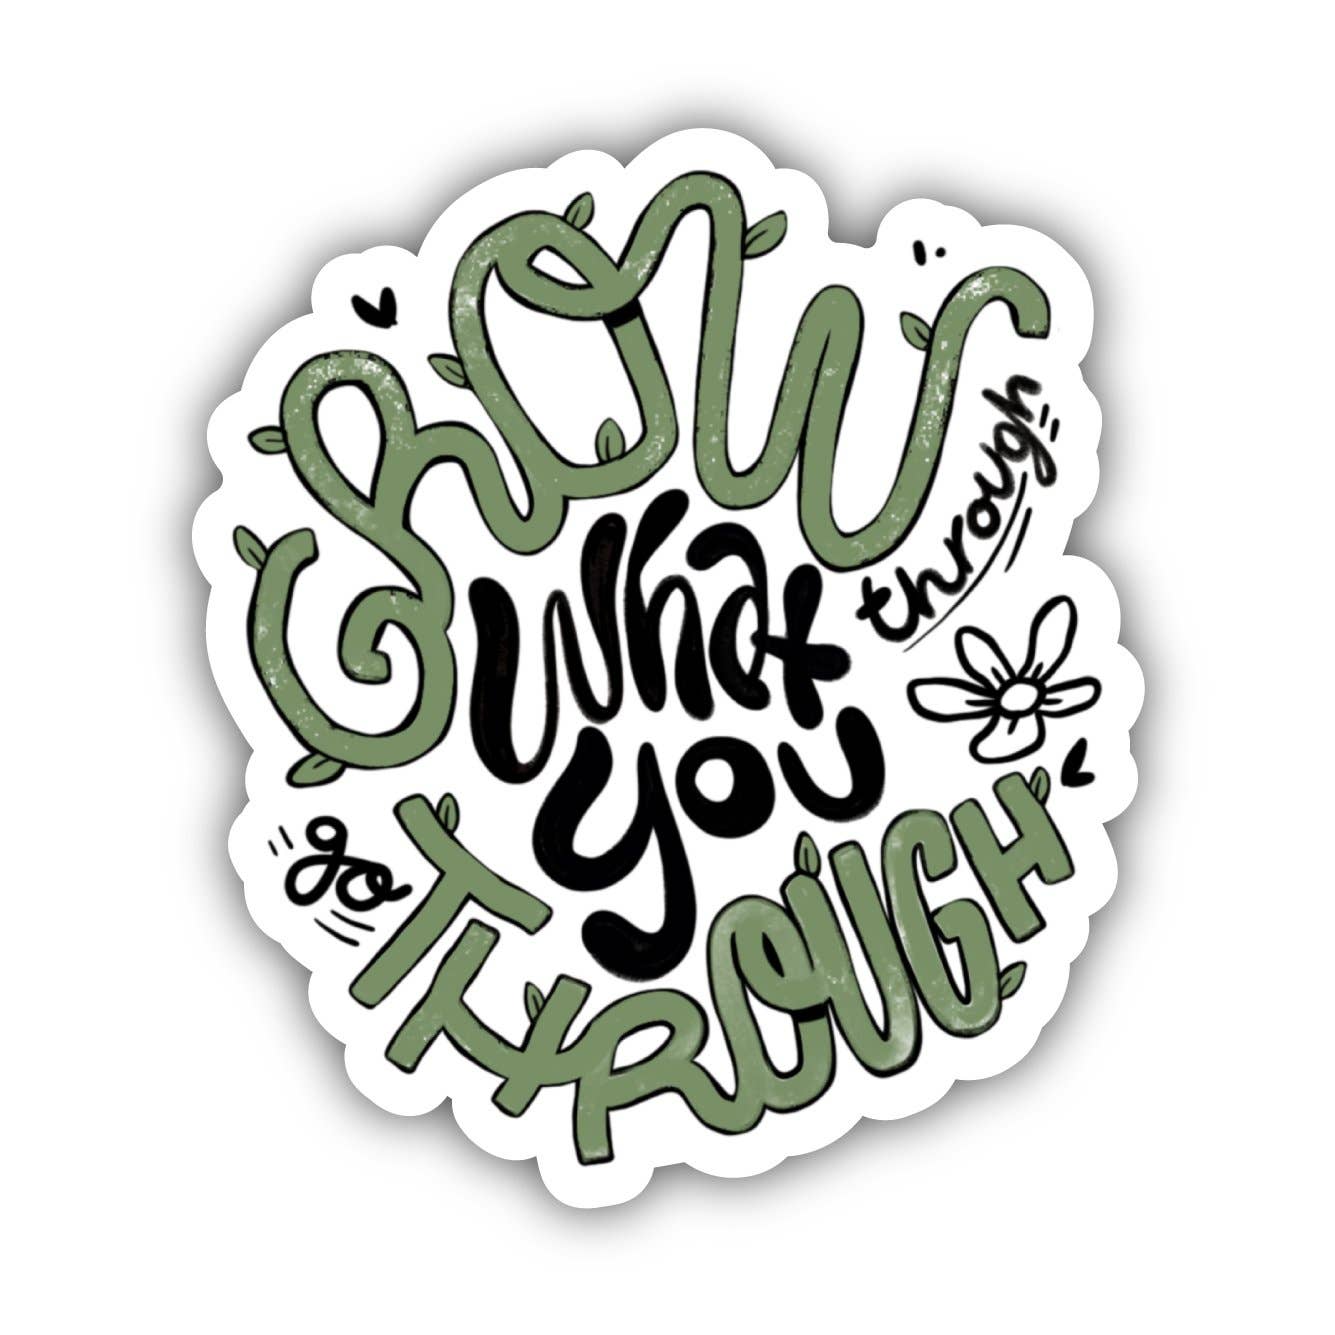 Grow What You Go Through Nature - Positivity Sticker